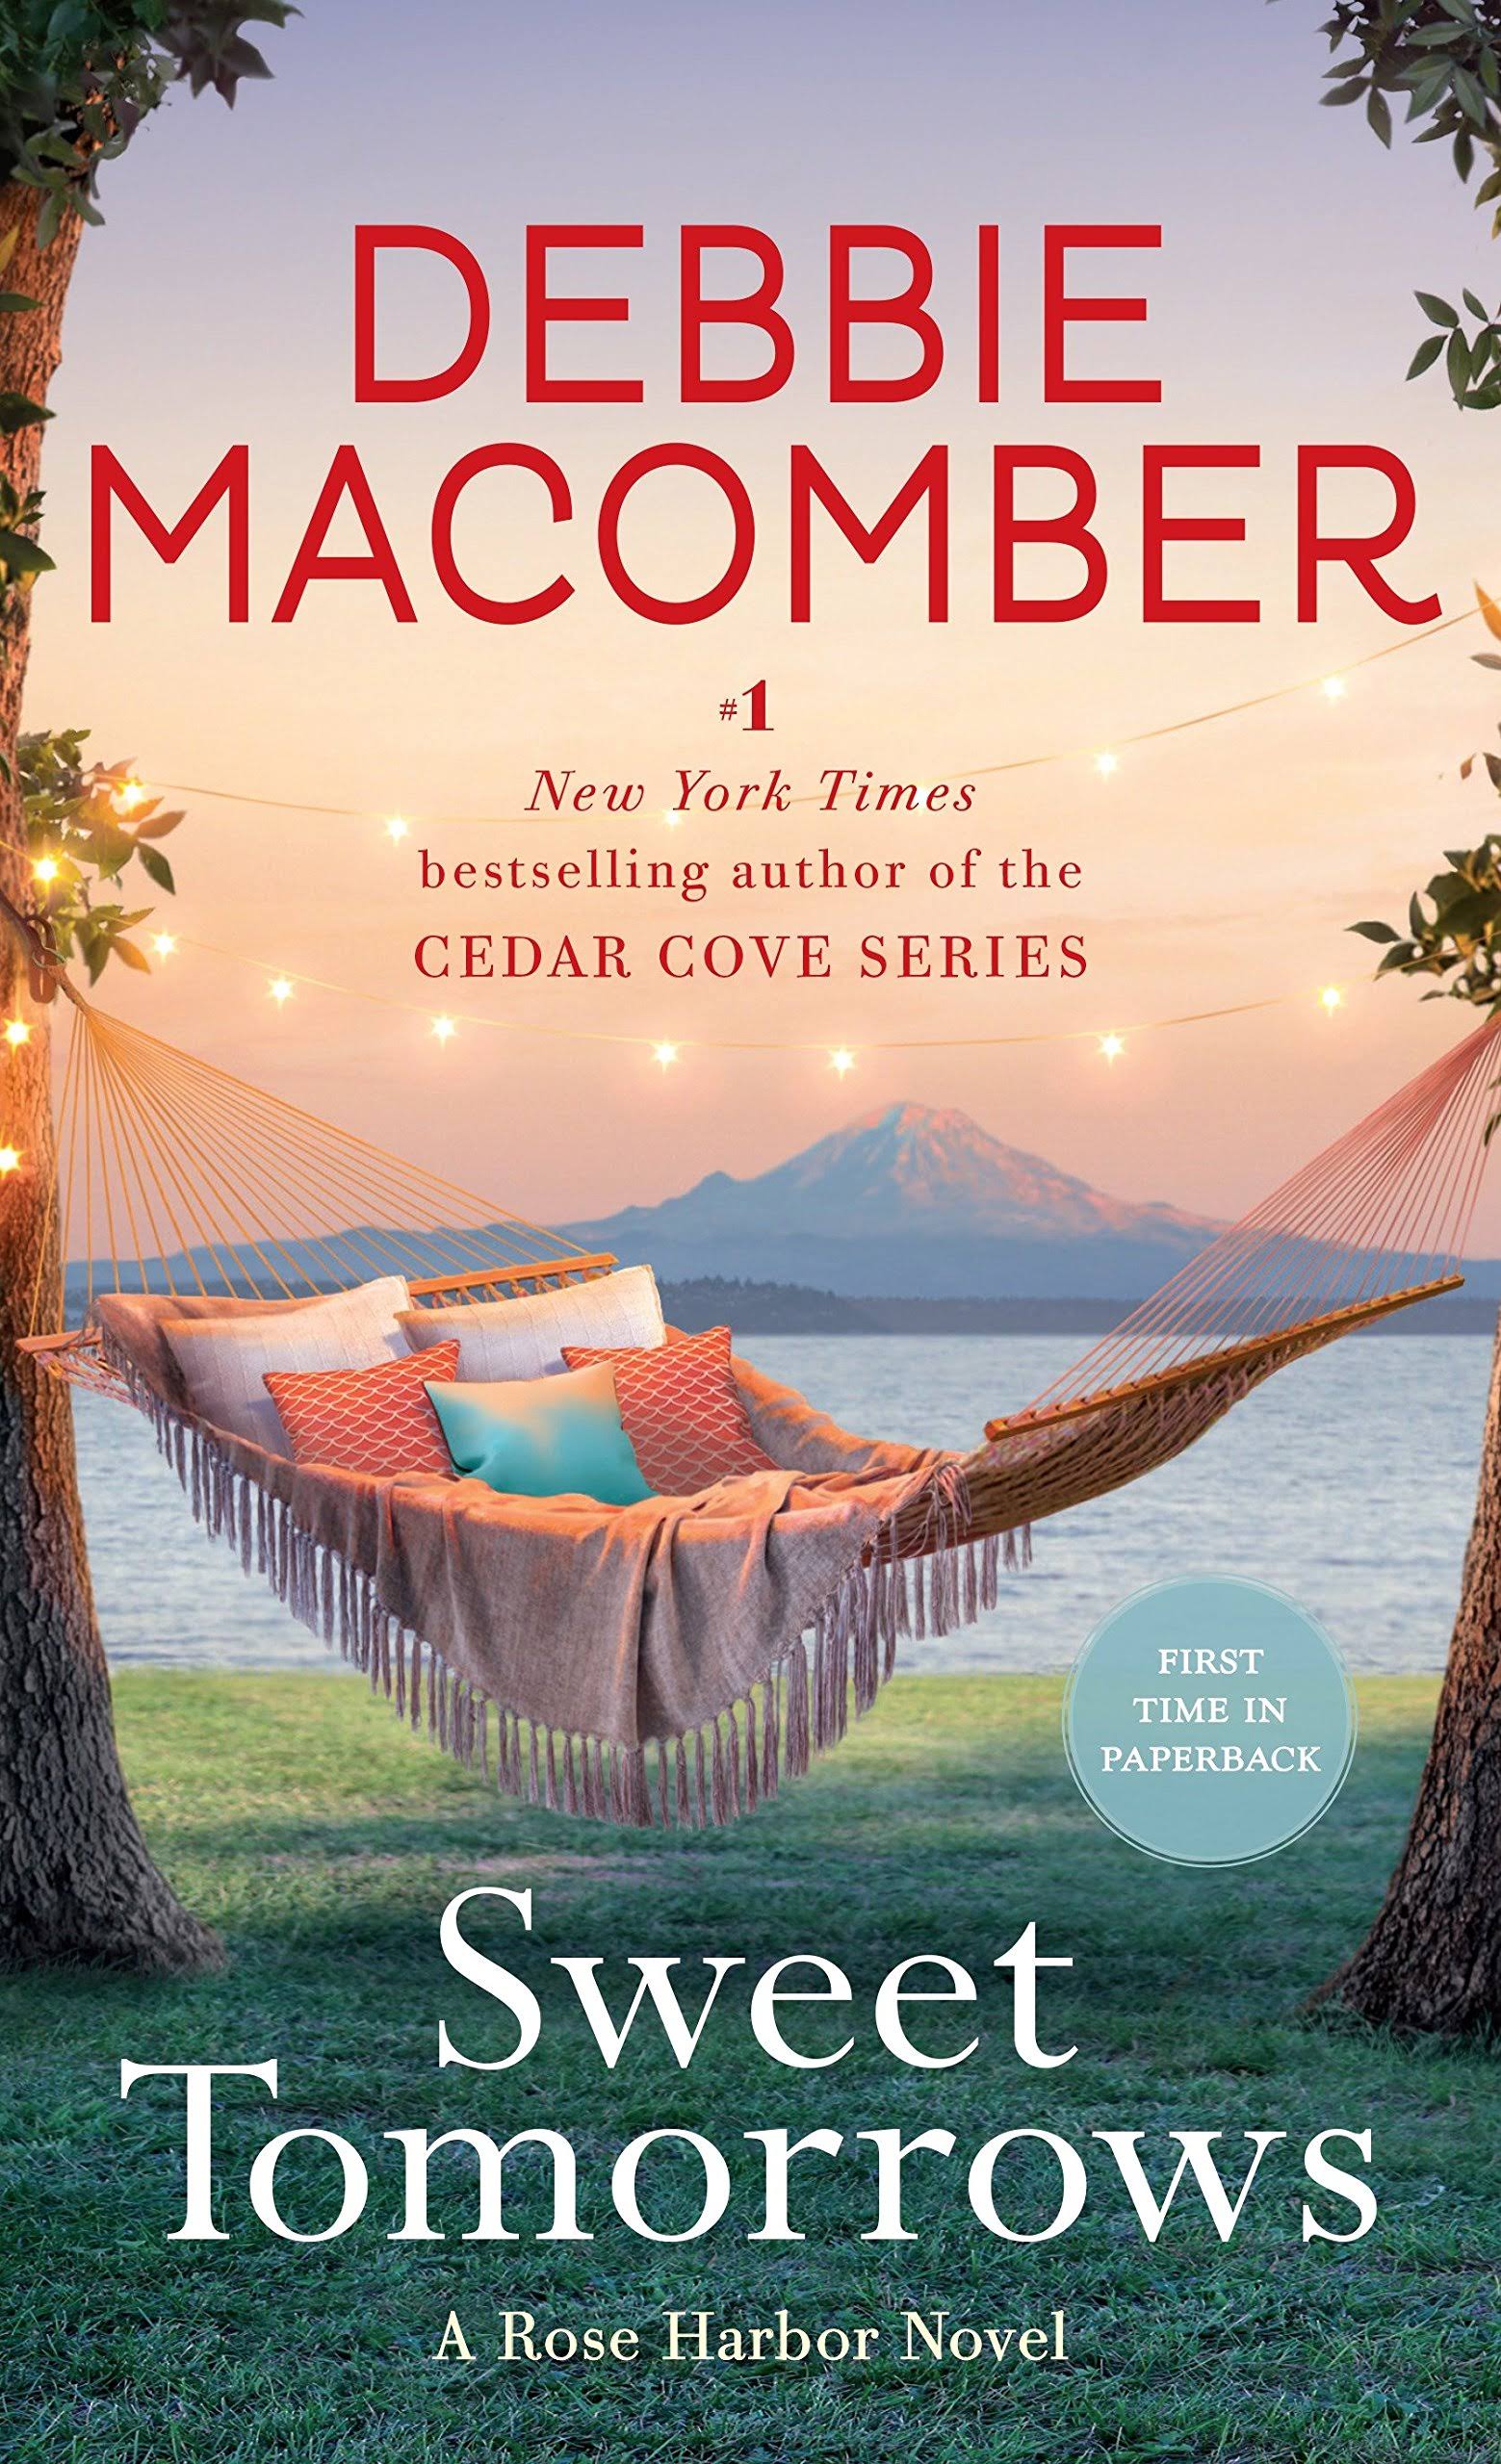 Sweet Tomorrows: A Rose Harbor Novel - Debbie Macomber